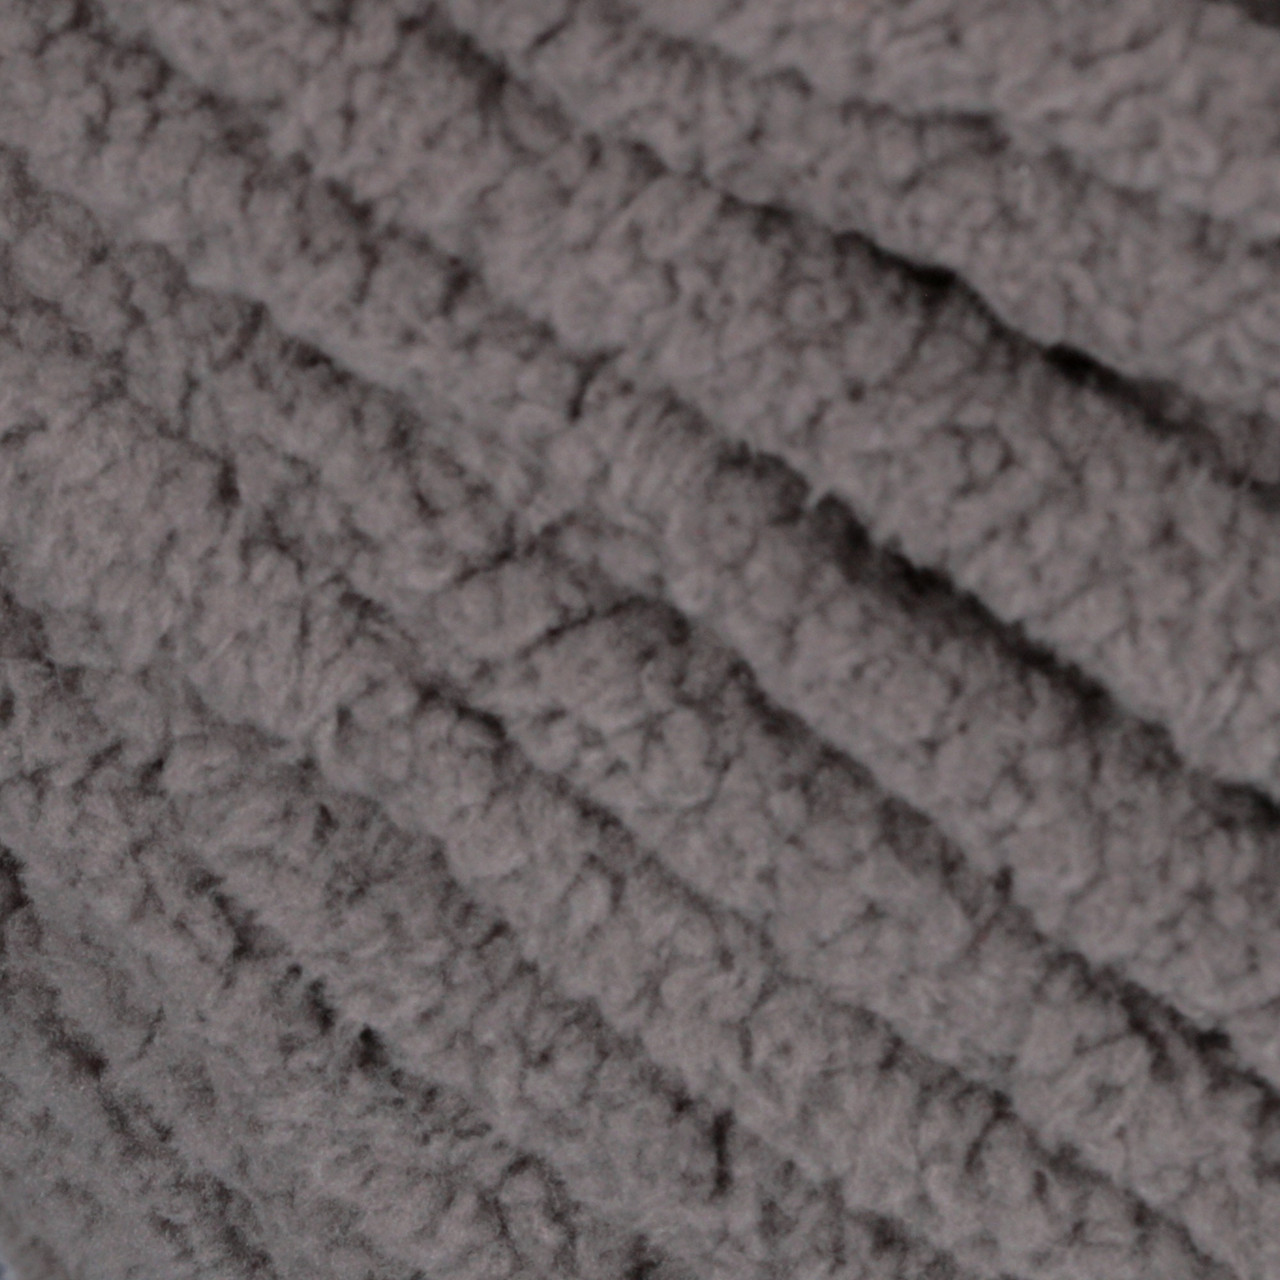 Bernat Blanket Yarn-Dark Grey 161200-44 - GettyCrafts